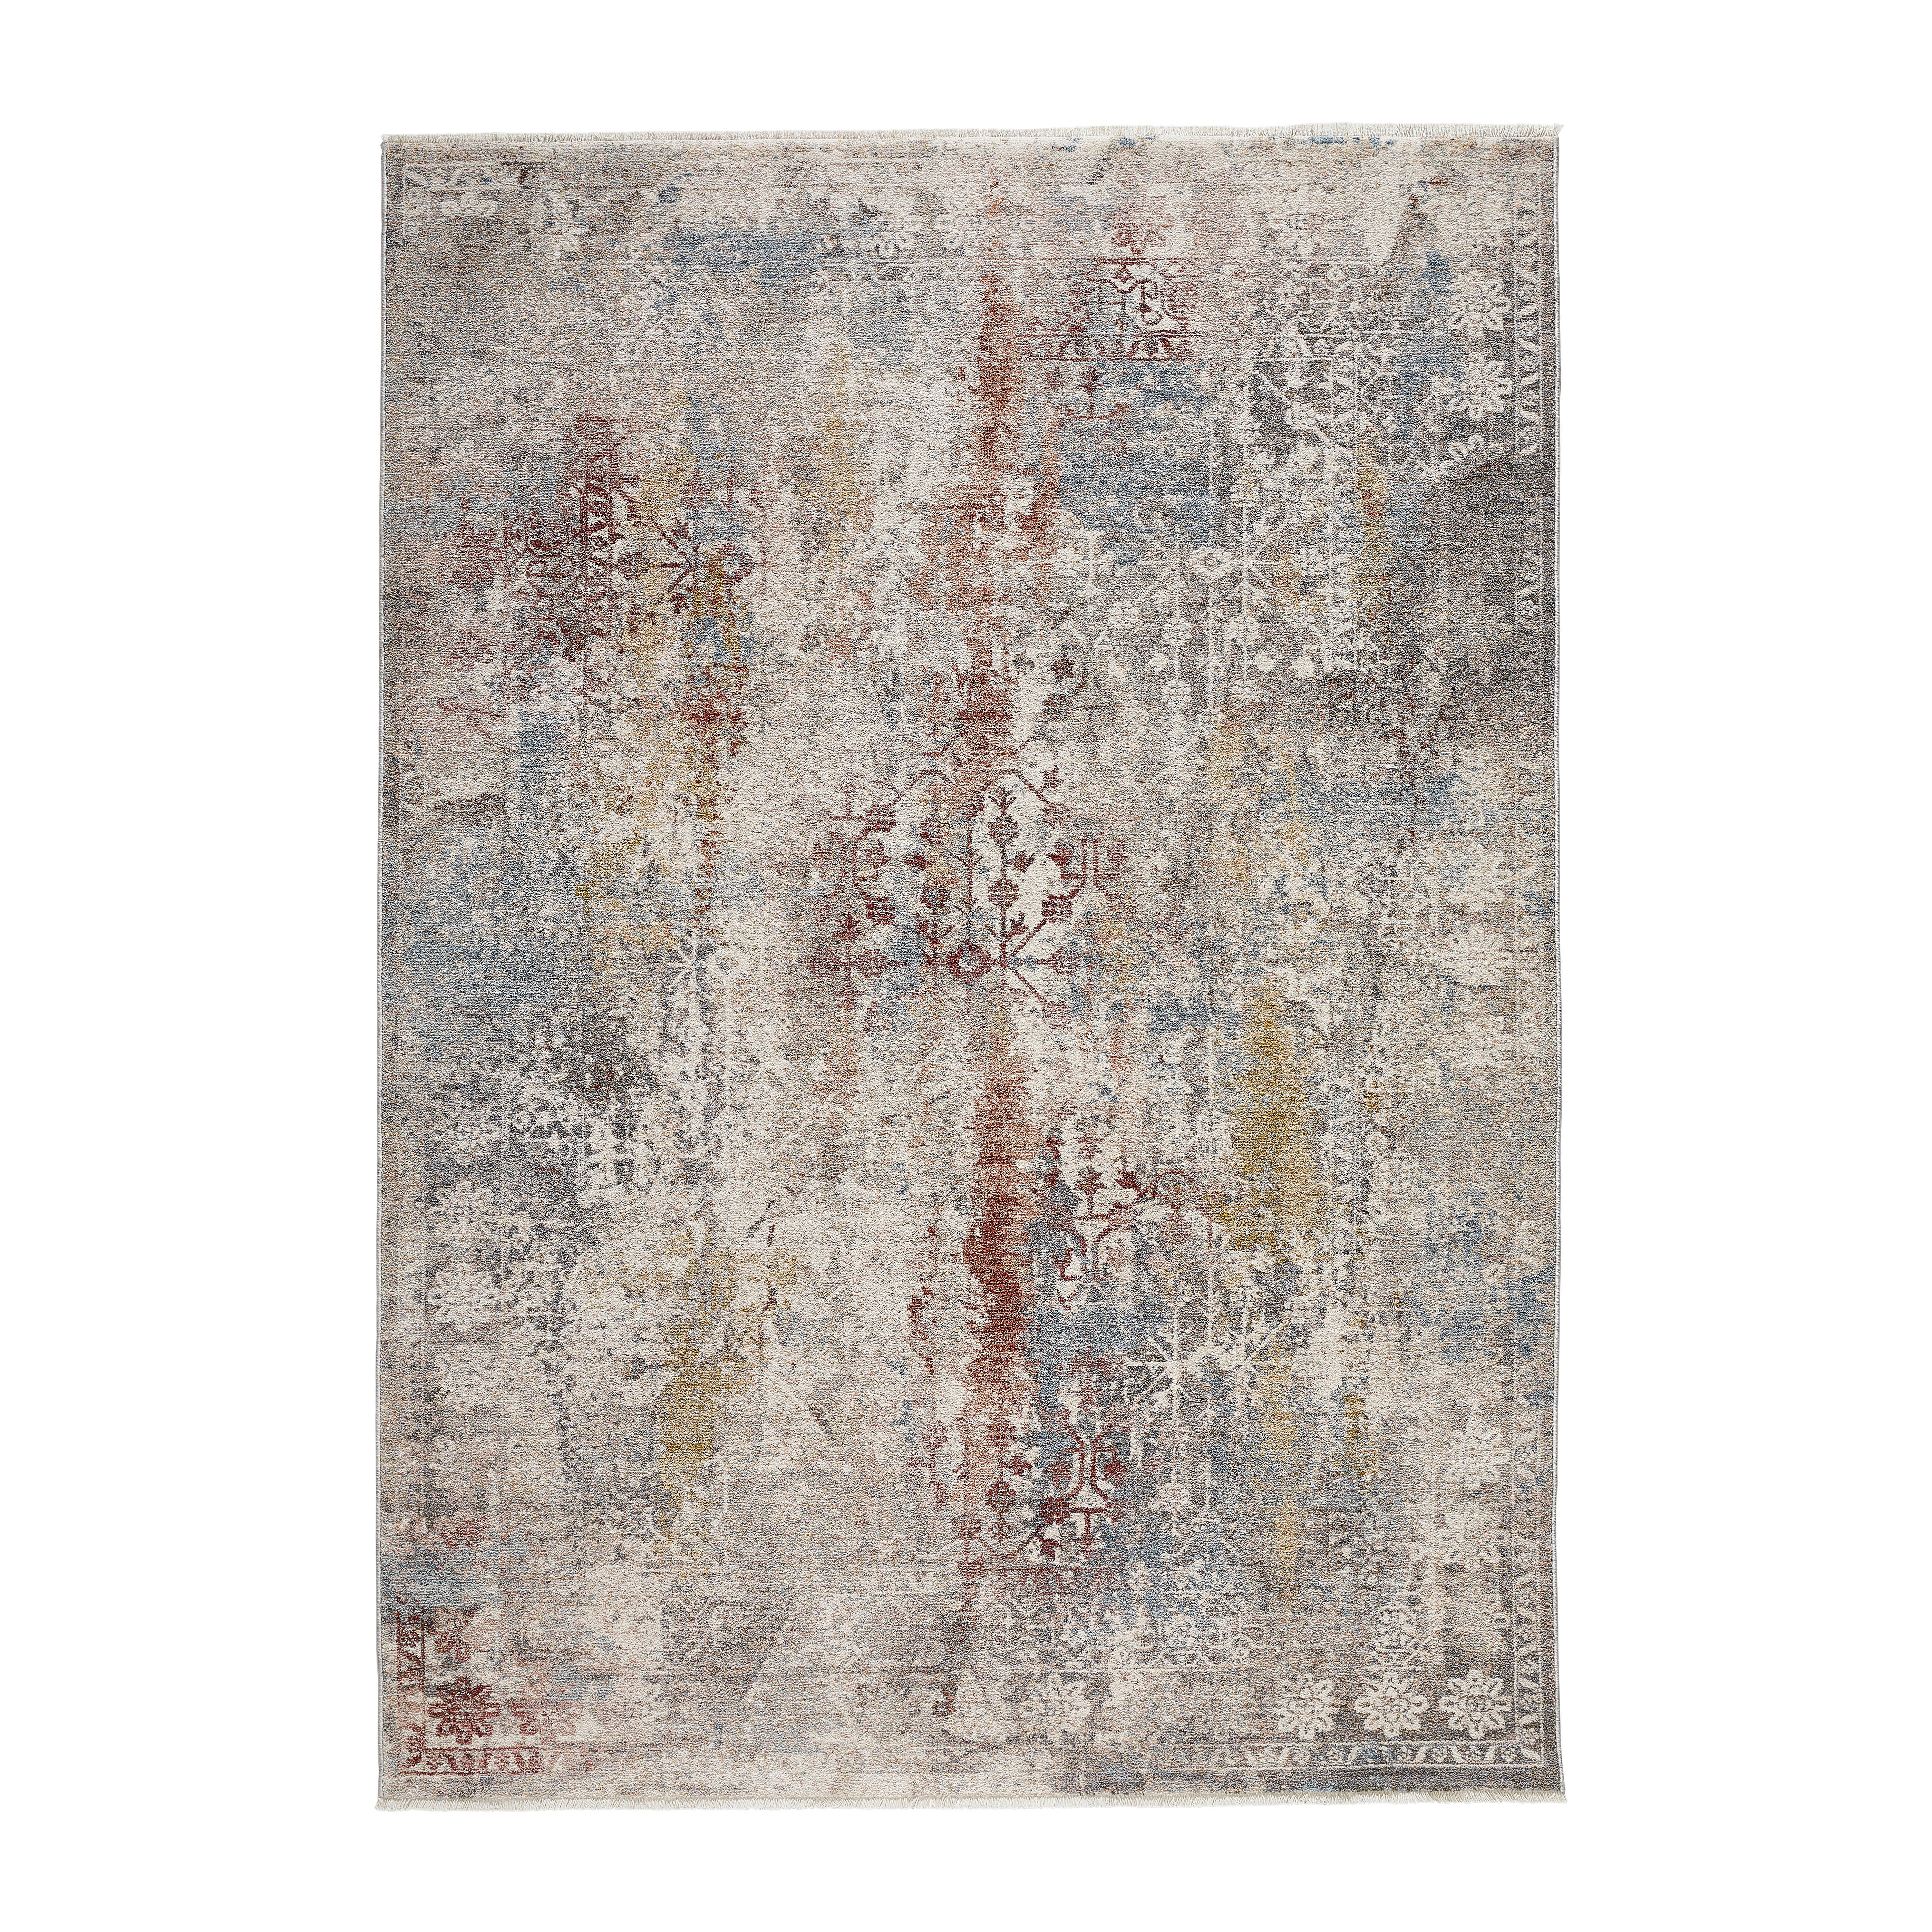 VINTAGE-TEPPICH 133/190 cm  - Multicolor/Hellgrau, KONVENTIONELL, Textil (133/190cm) - Novel